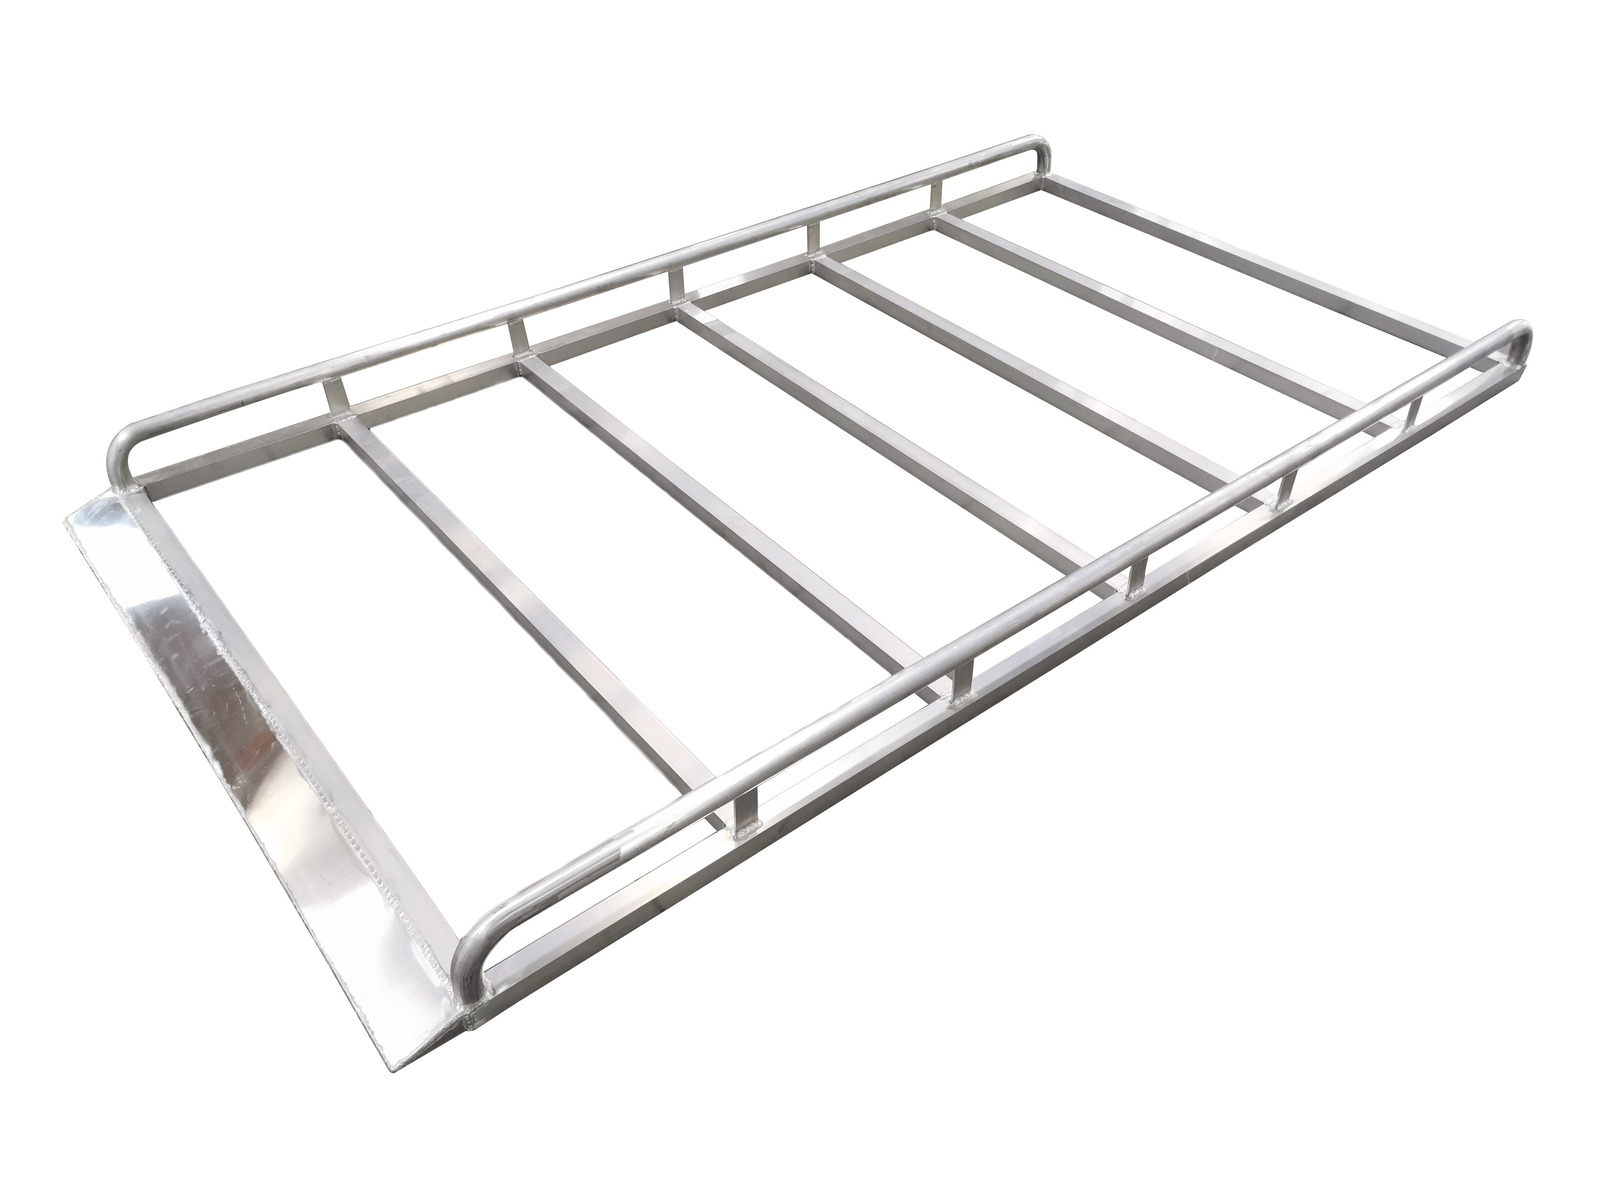 Buy Aluminium Full Roof Rack 3.0m x 1.4m with Wind Deflector Online